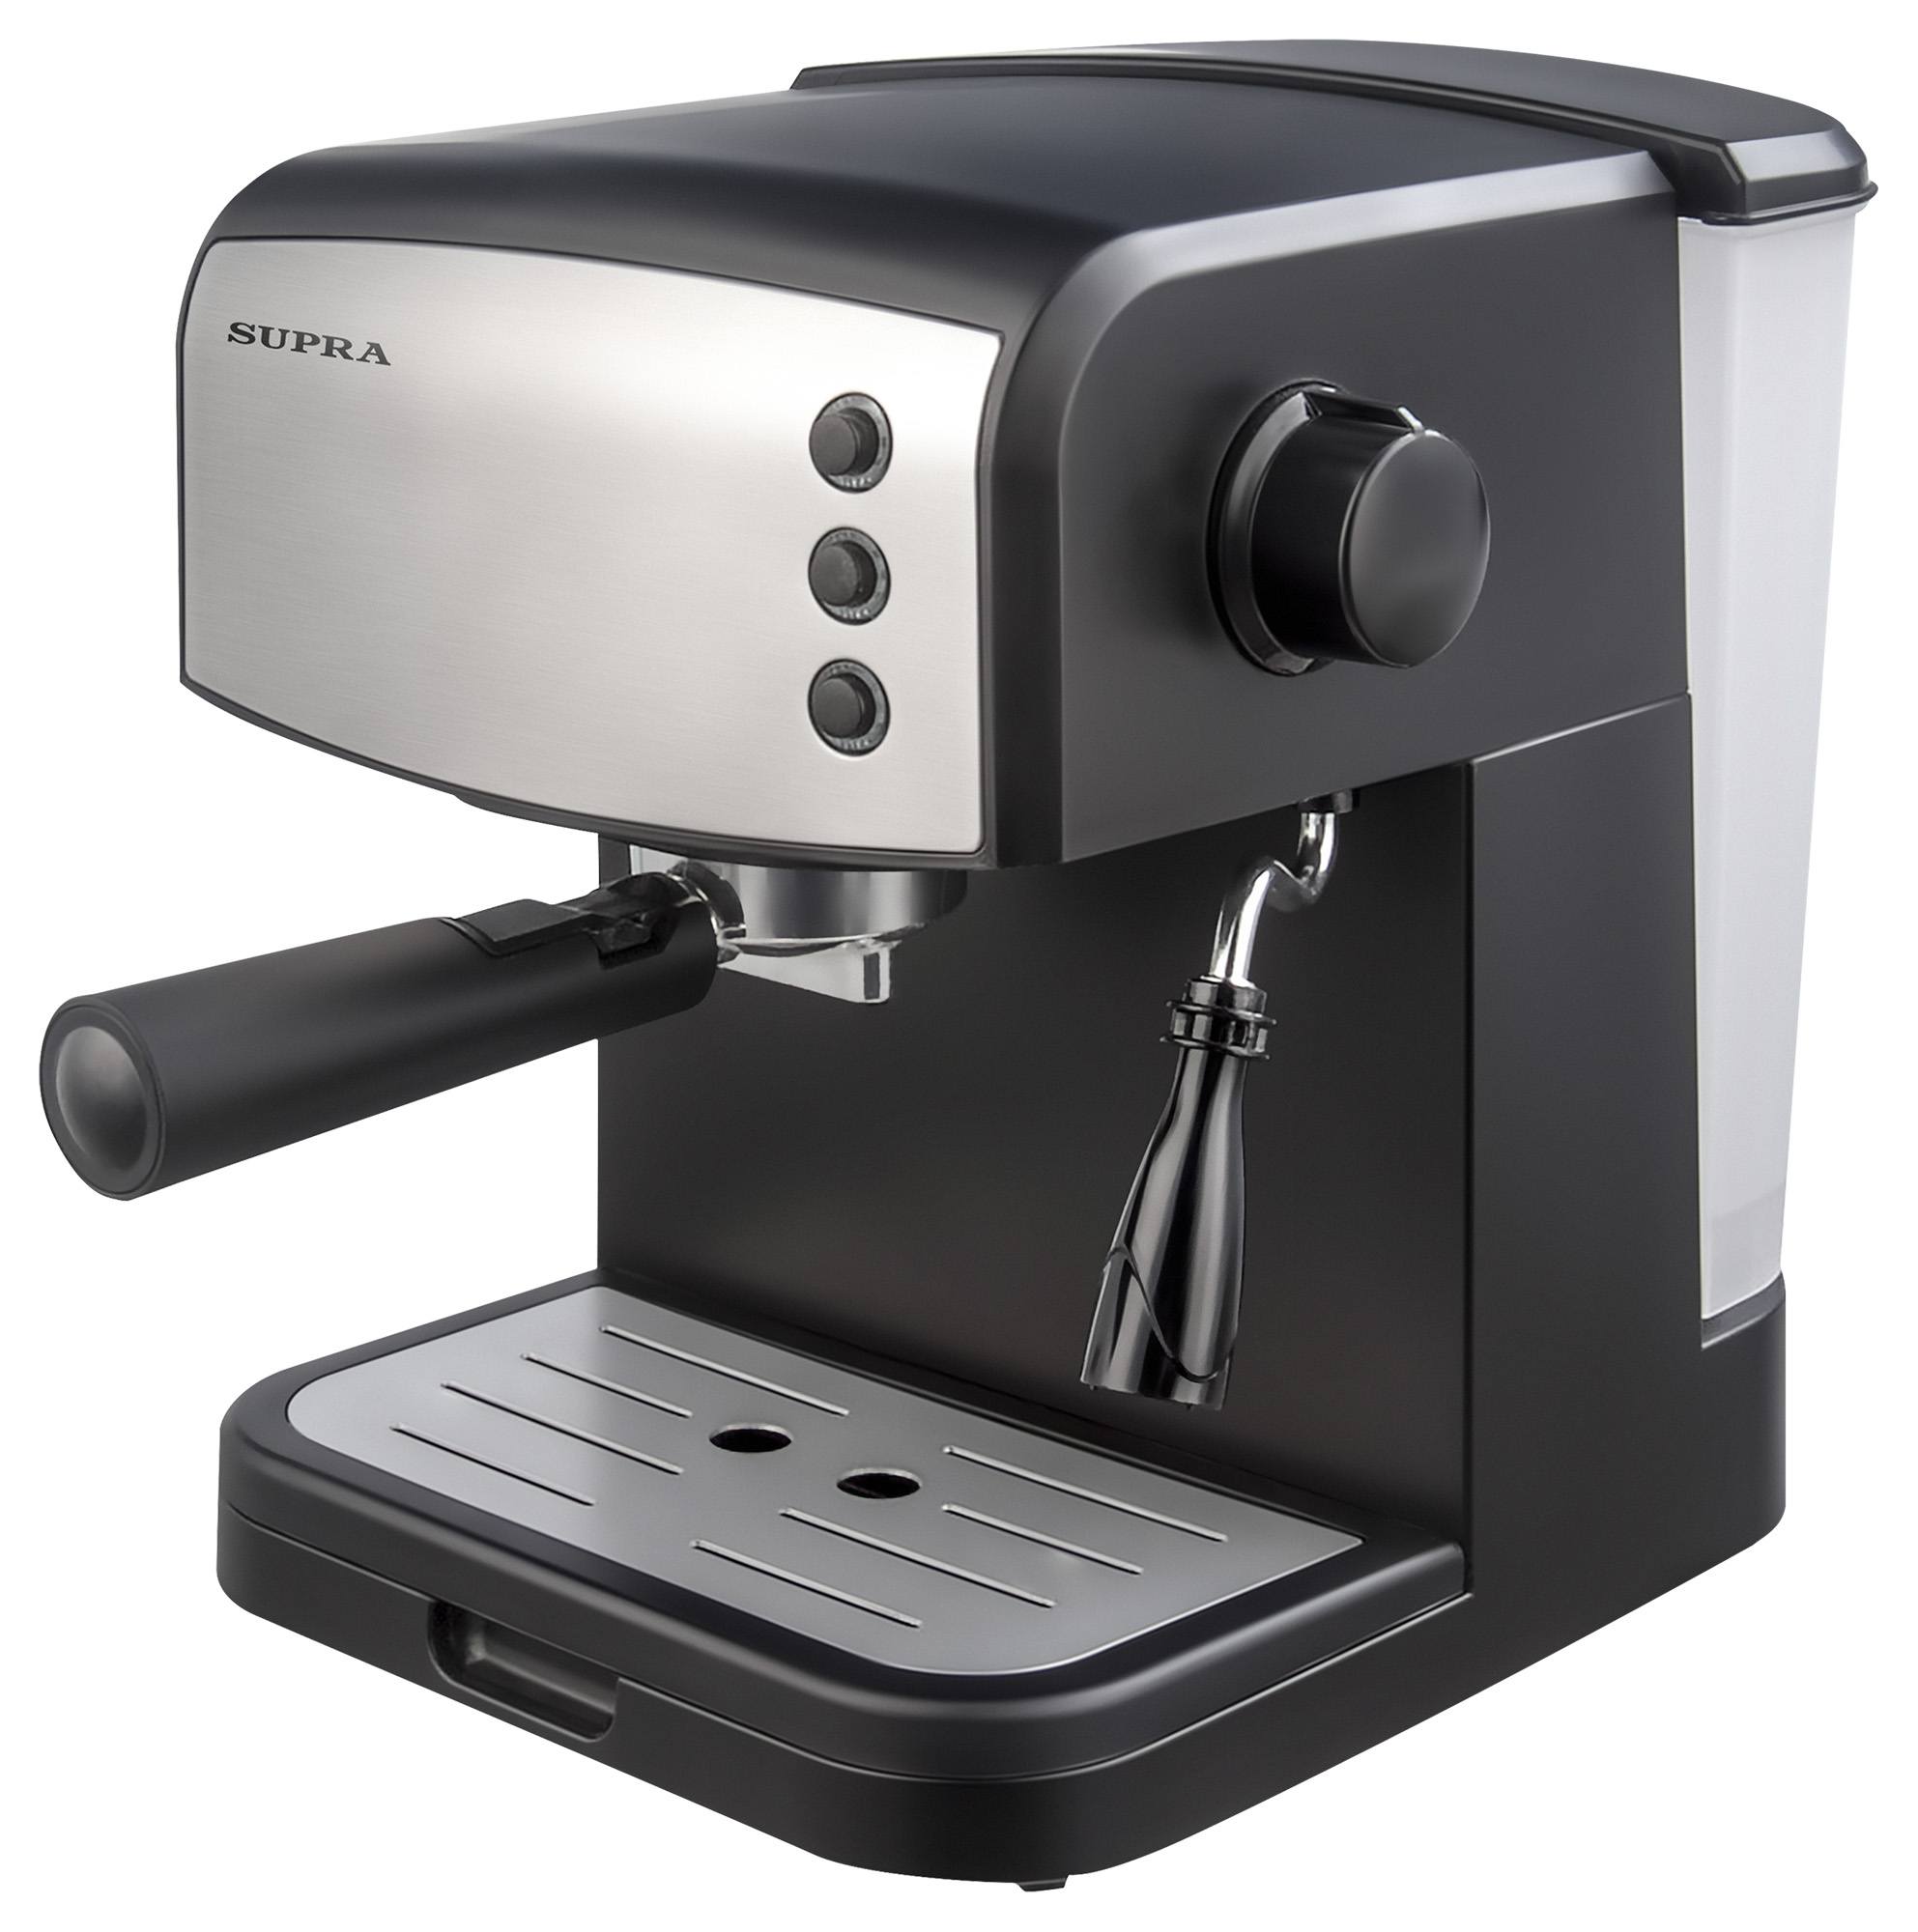 Кофеварка капельного типа Supra CMS-1510 Black/Silver кофеварка капельного типа bq cm7002 серебристый